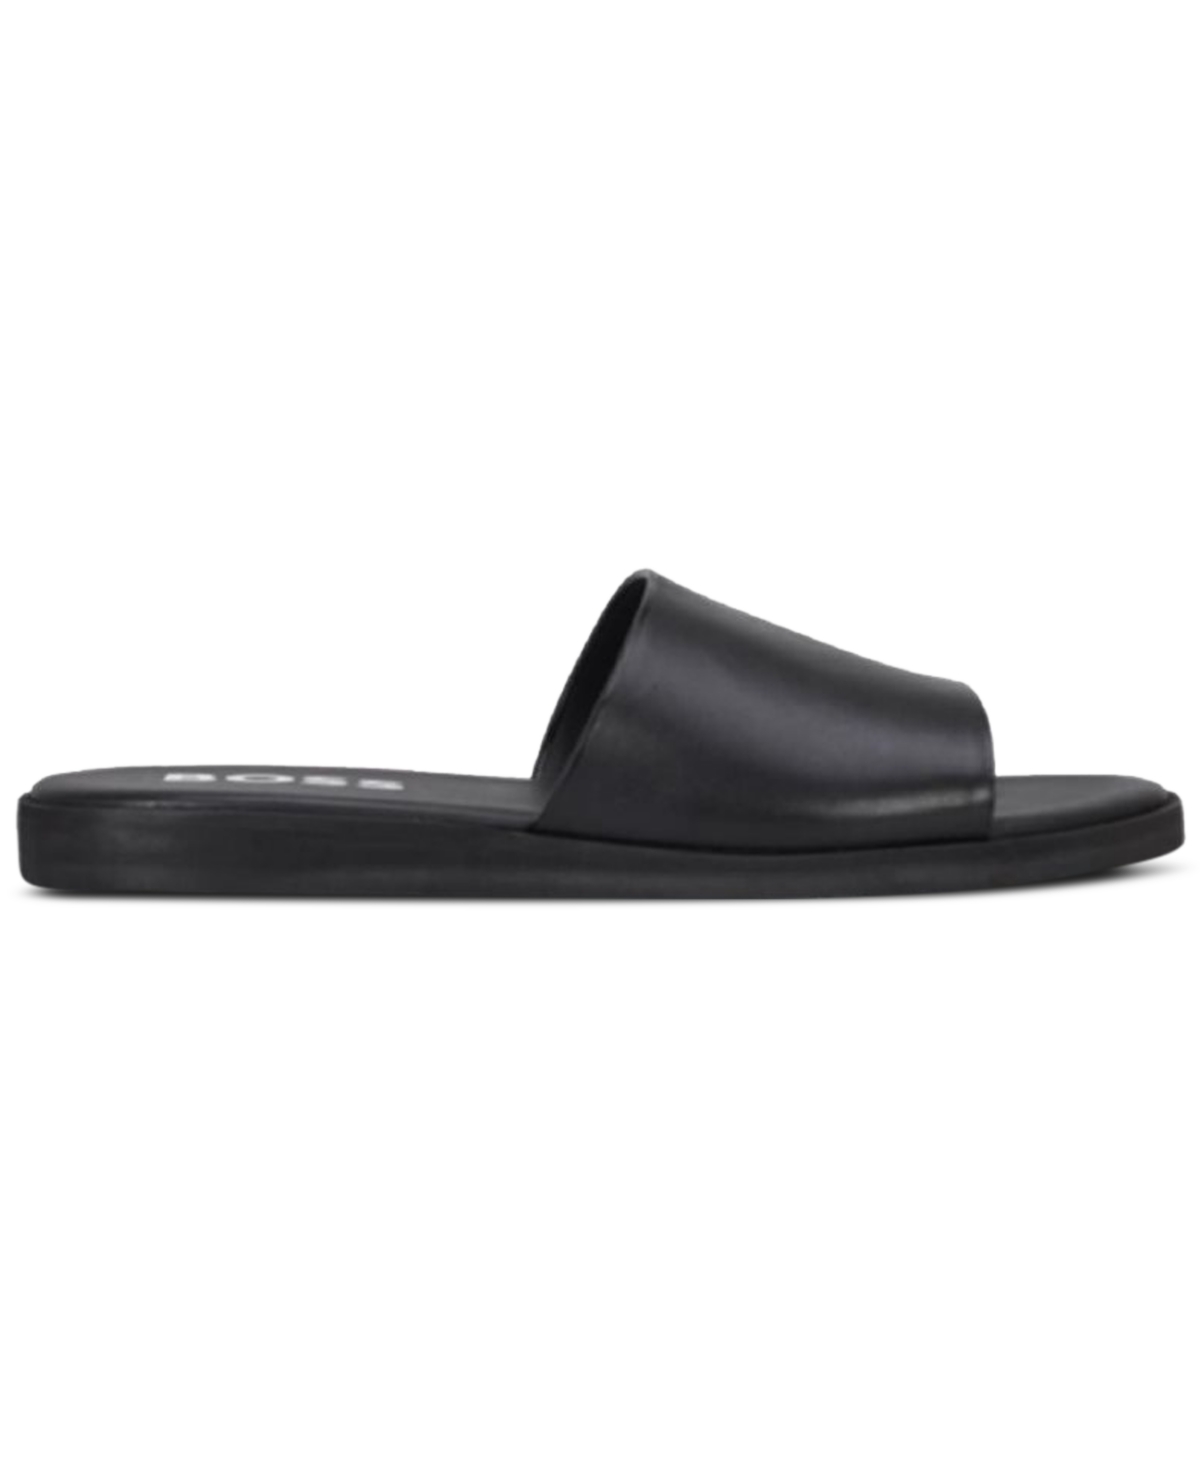 by Hugo Boss Men's Darrel Slide Sandals - Black